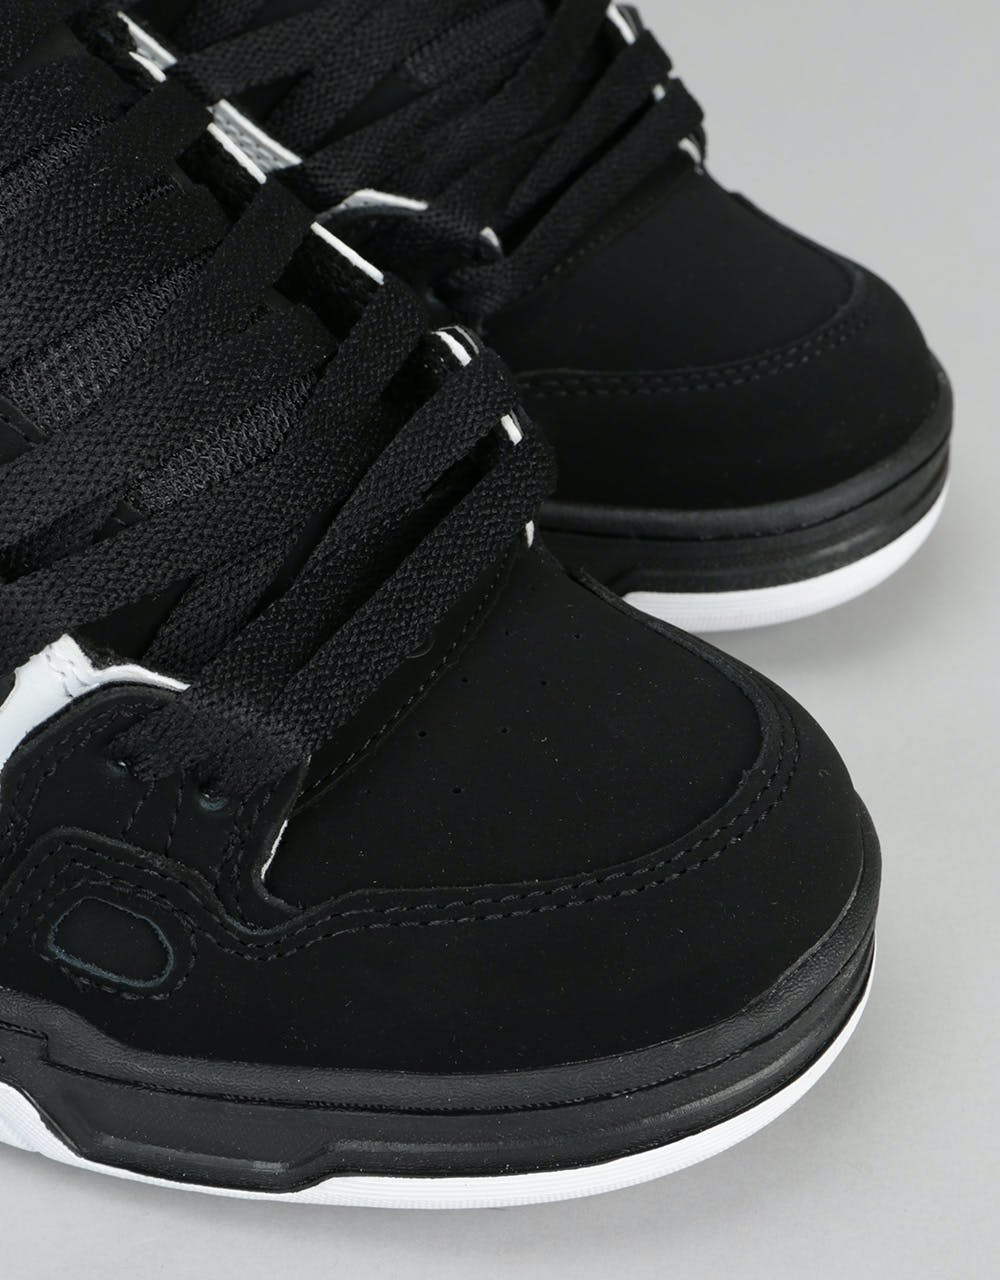 DVS Commanche Skate Shoes - Black/White Nubuck